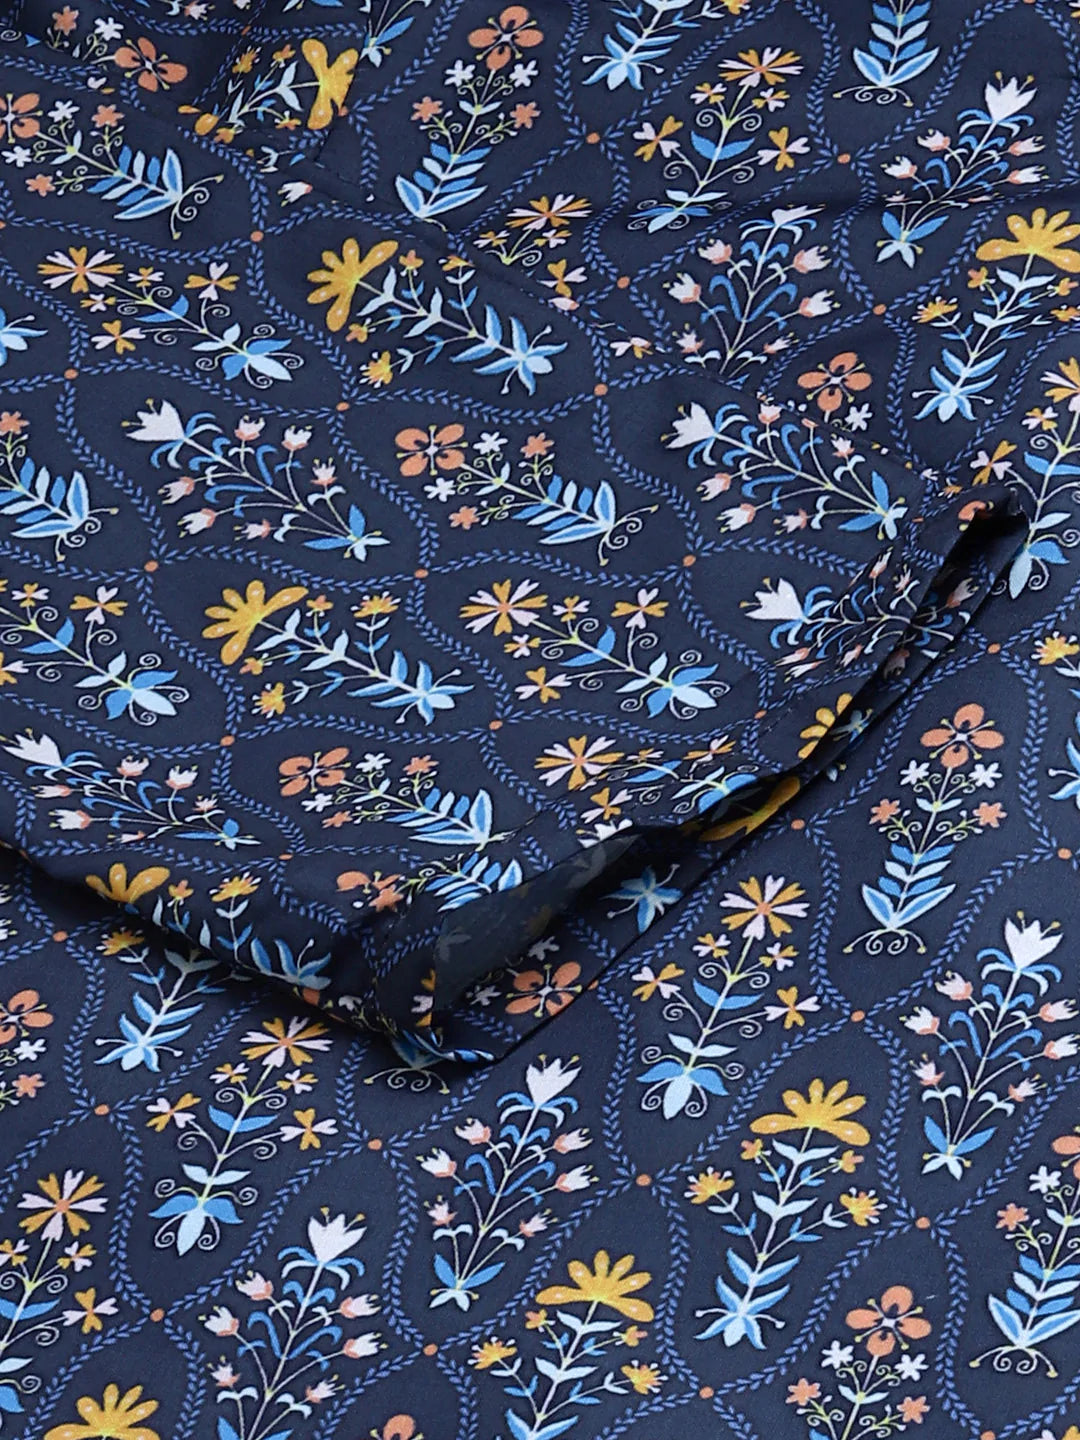 Jompers Women Blue & Yellow Floral Printed Keyhole Neck Floral Kurta ( JOK 1368 Navy )